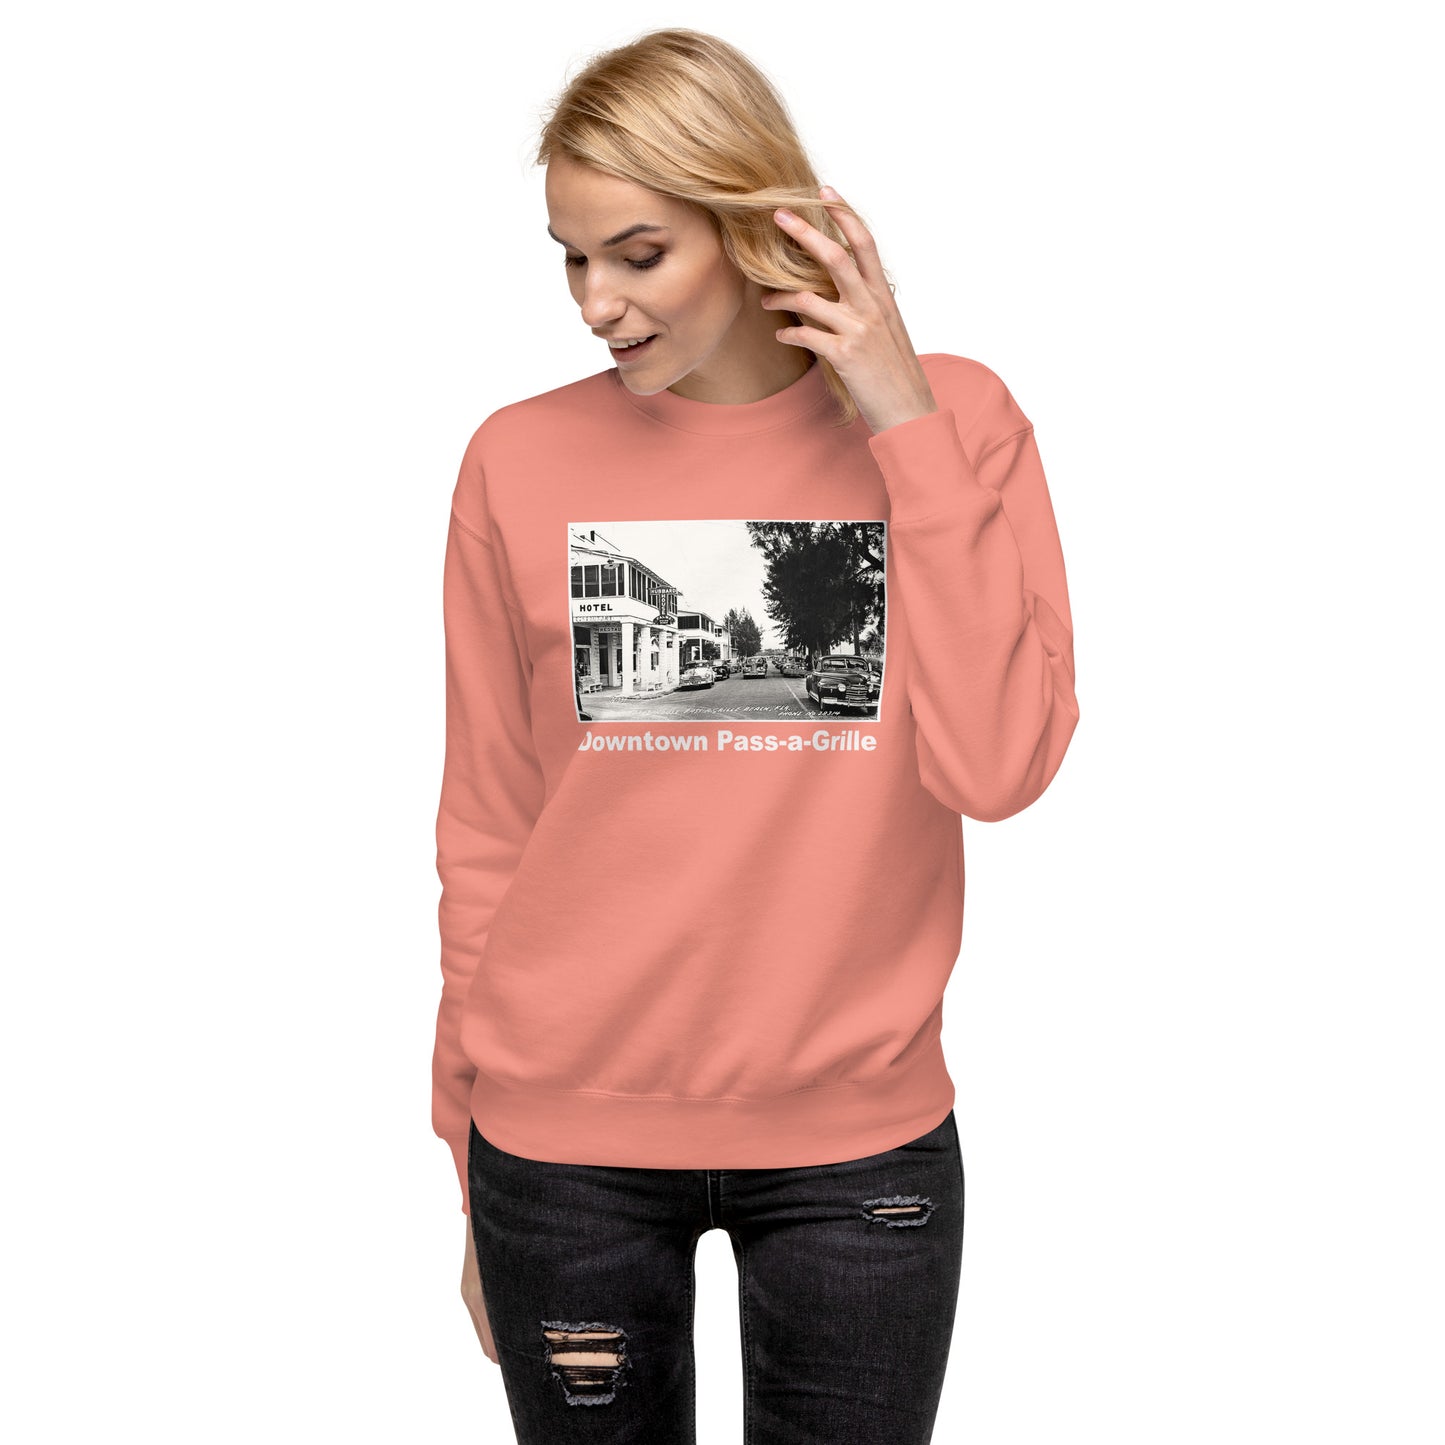 Downtown Pass-a-Grille Unisex Premium Sweatshirt